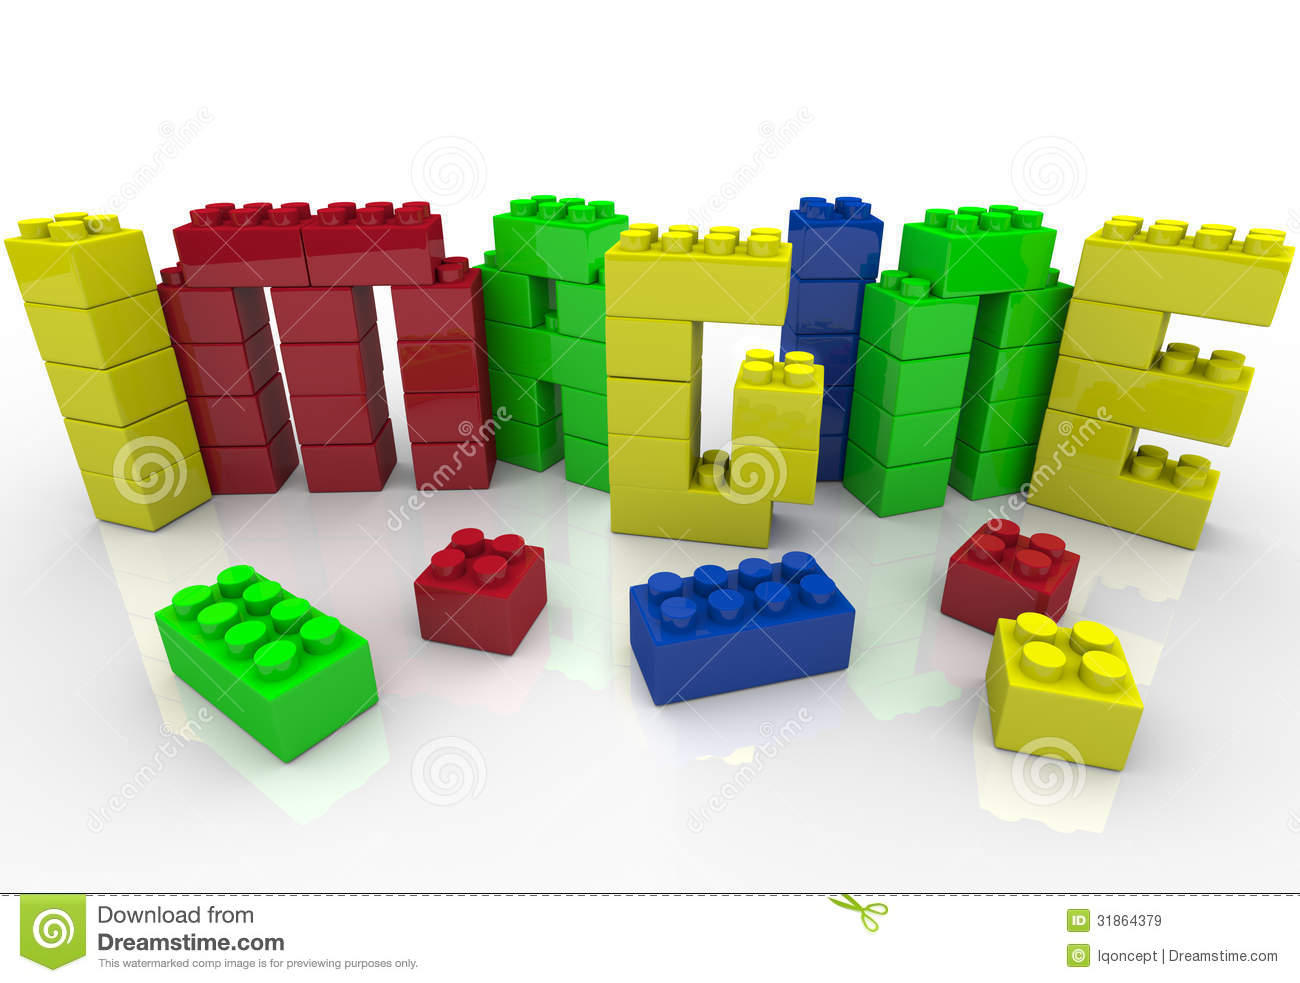 Imagine Word In Toy Plastic Blocks Idea Creativity Royalty Free Stock